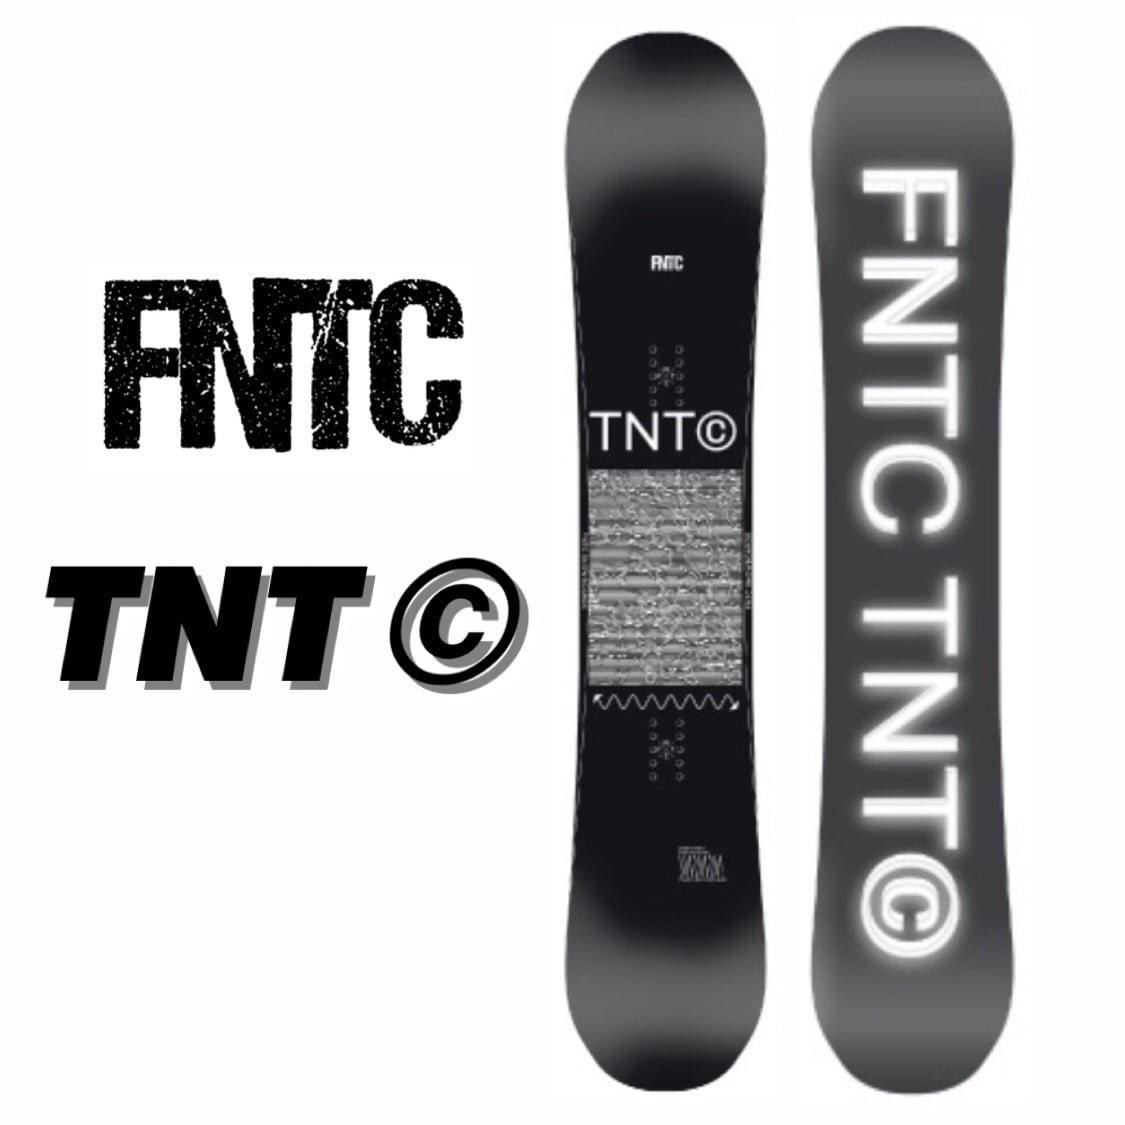 FNTC】 TNT C スノーボード 22-23 ブラック 150cm メンズ ...